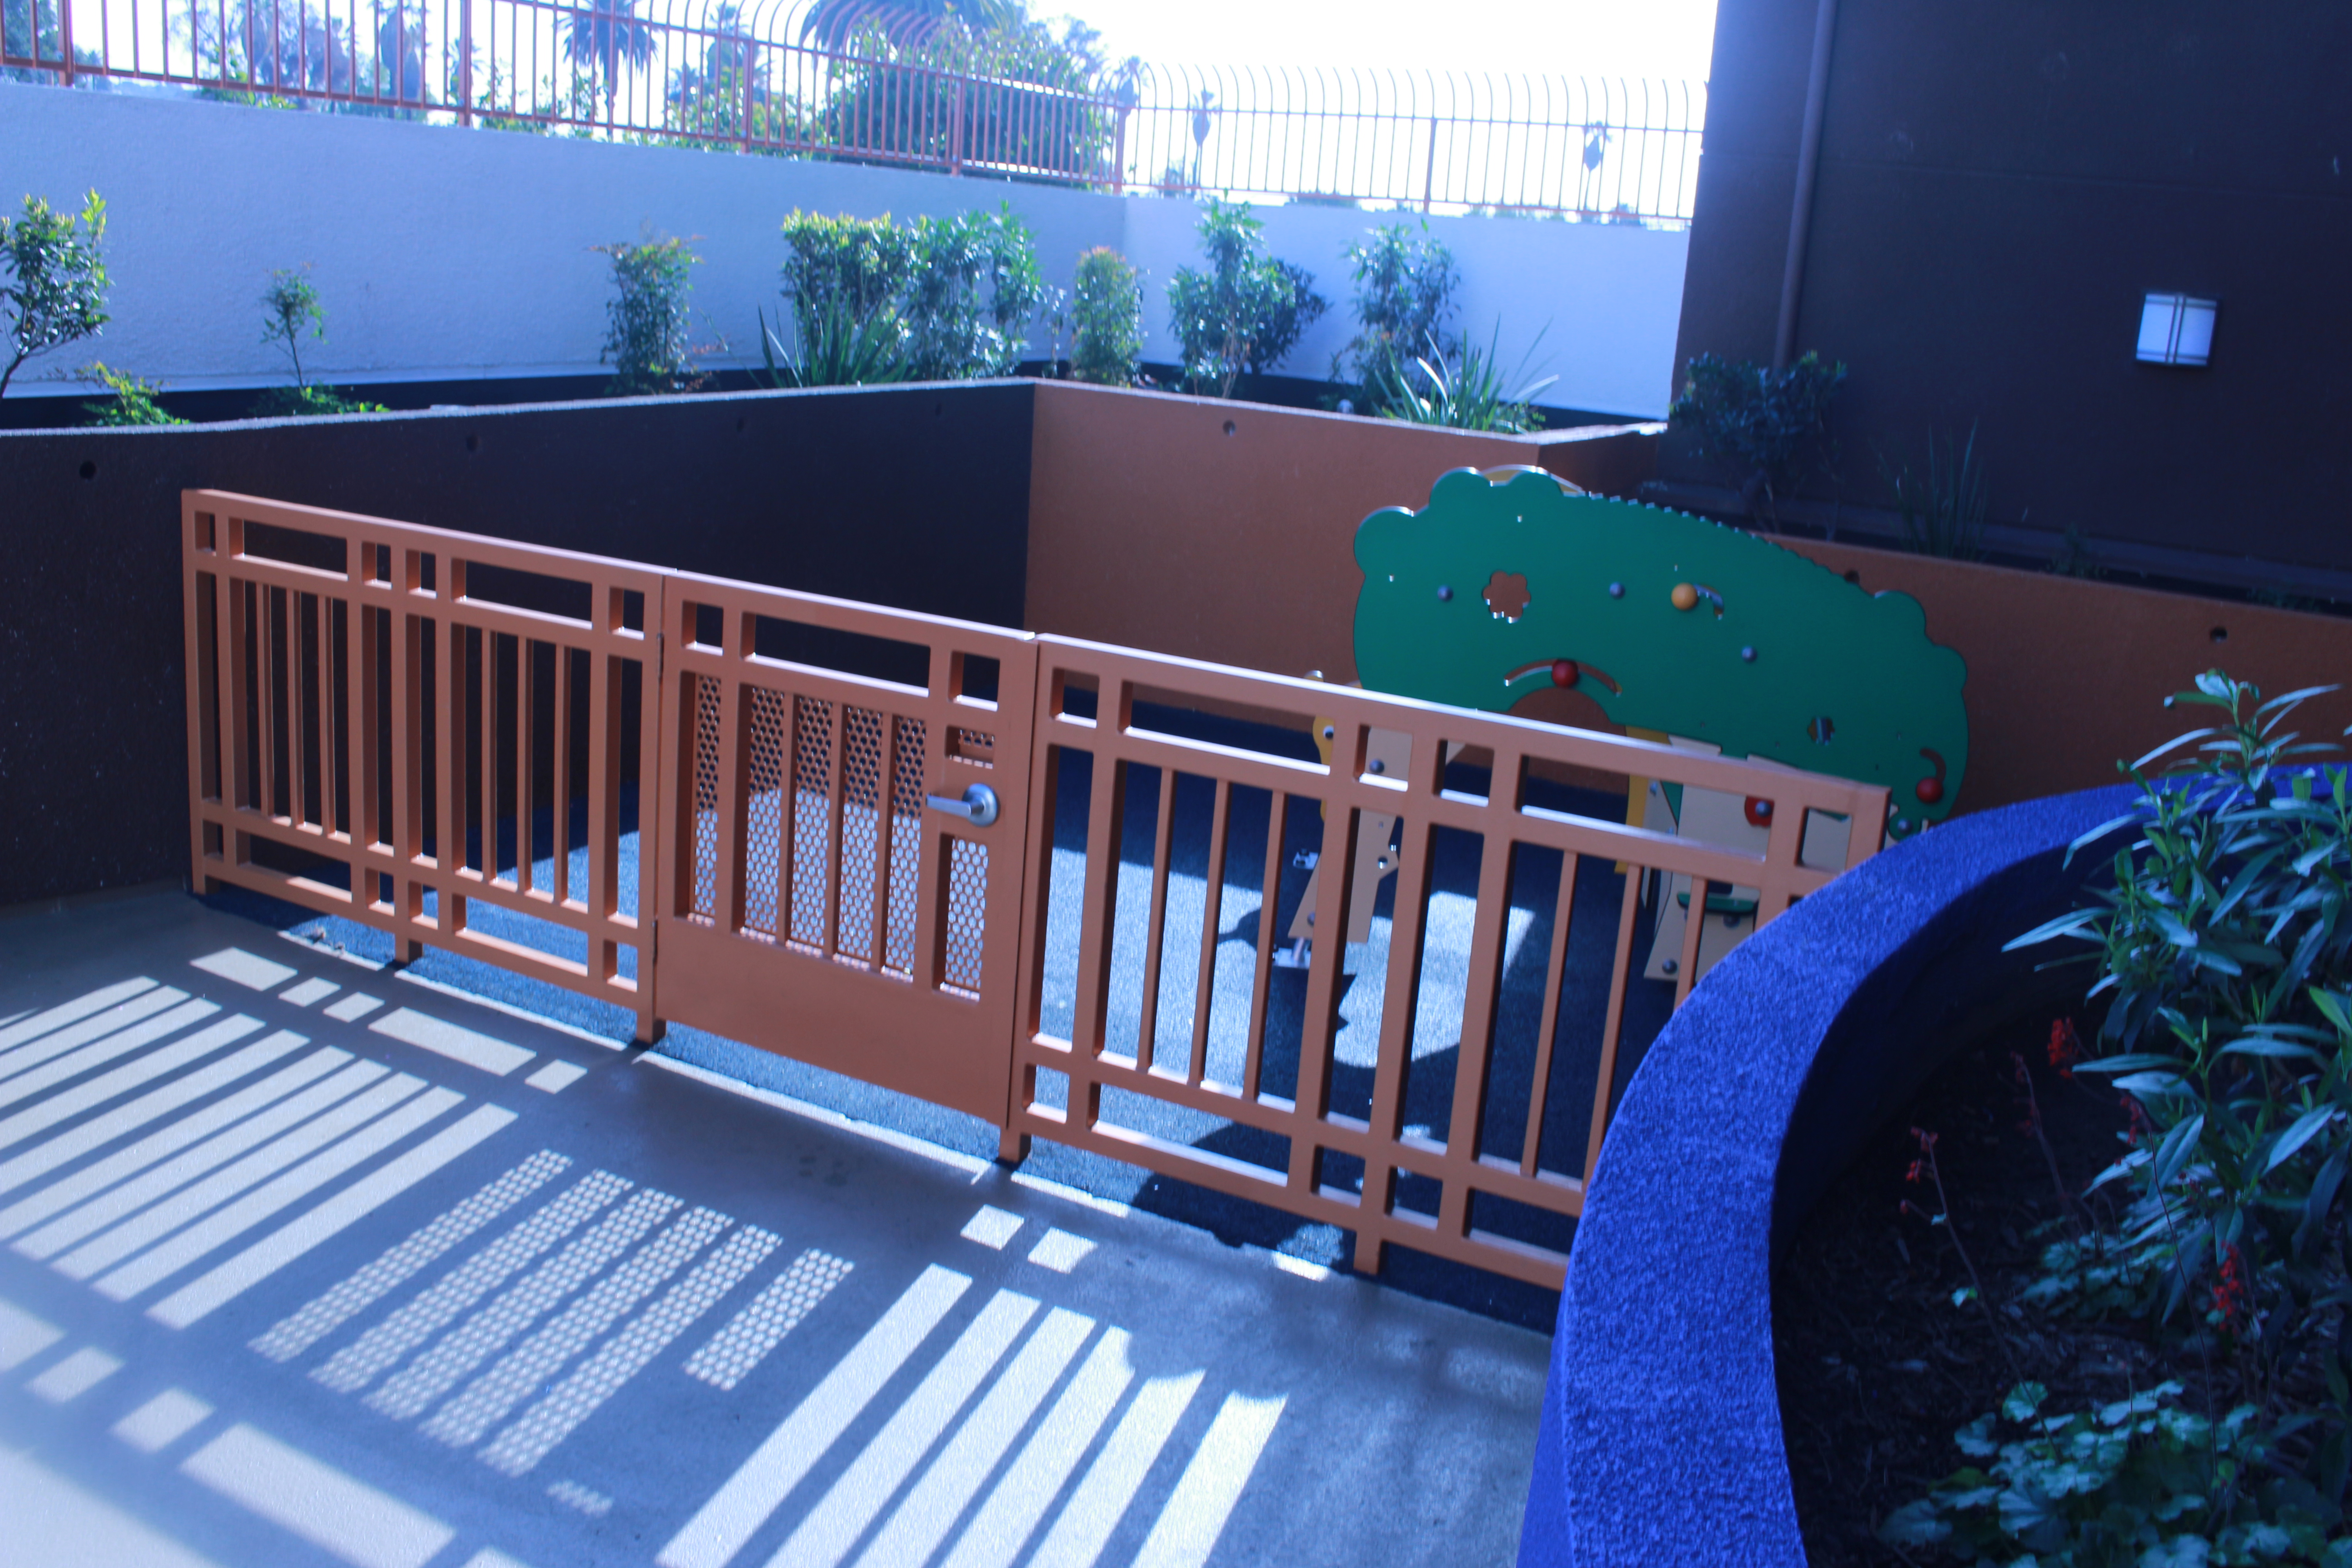 Playground with a brown iron gate, plants around.